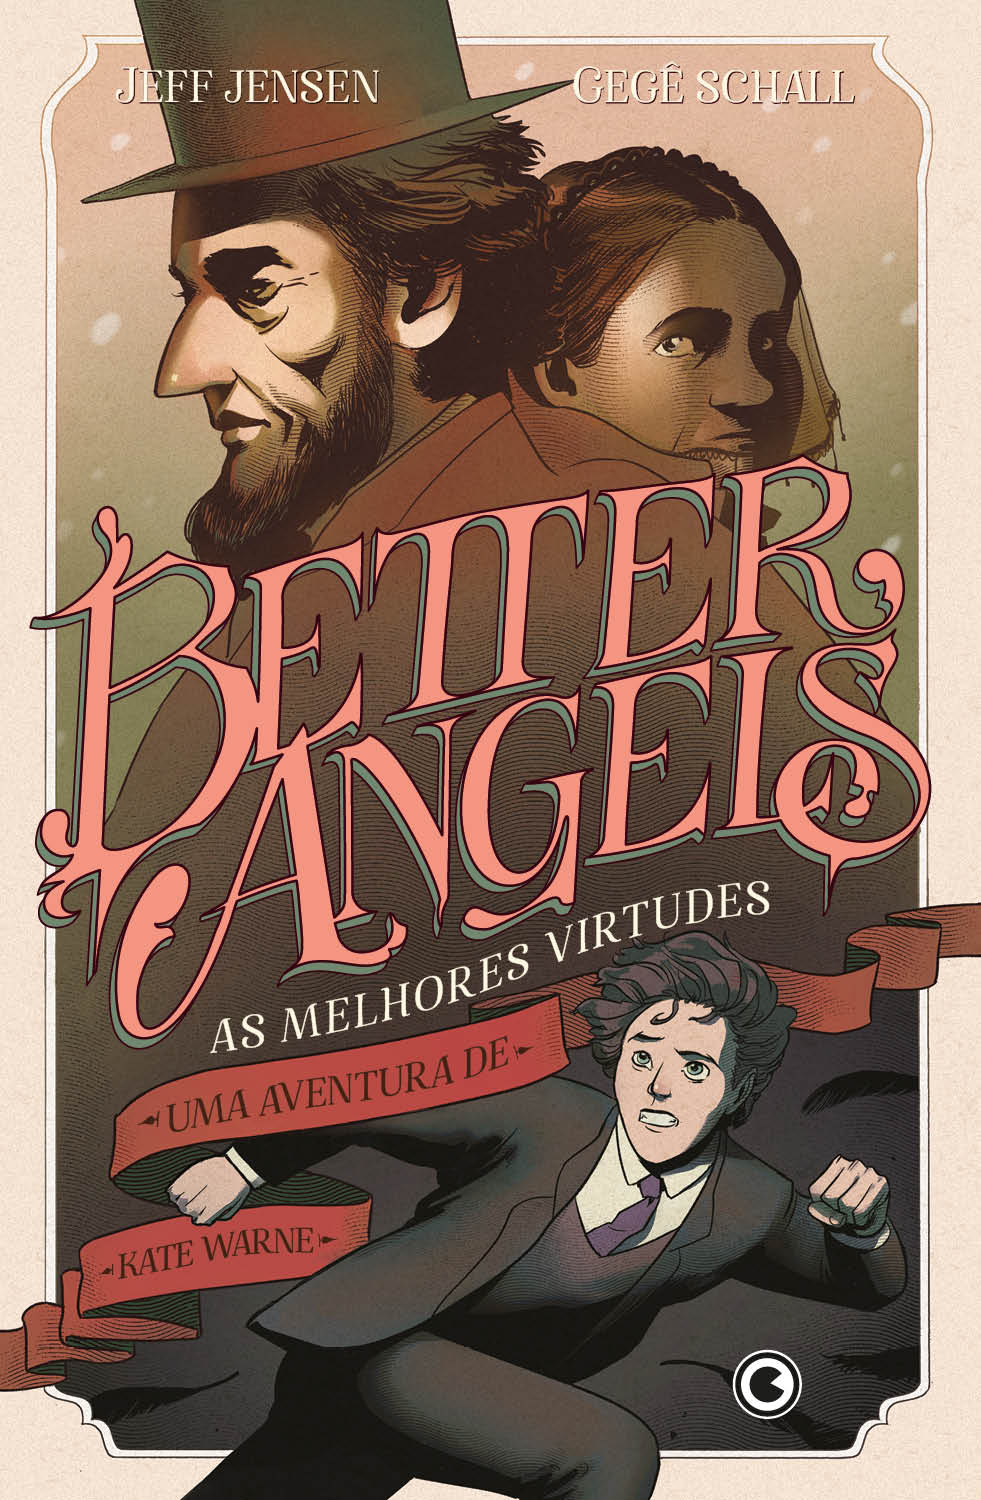 Better Angels As melhores virtudes